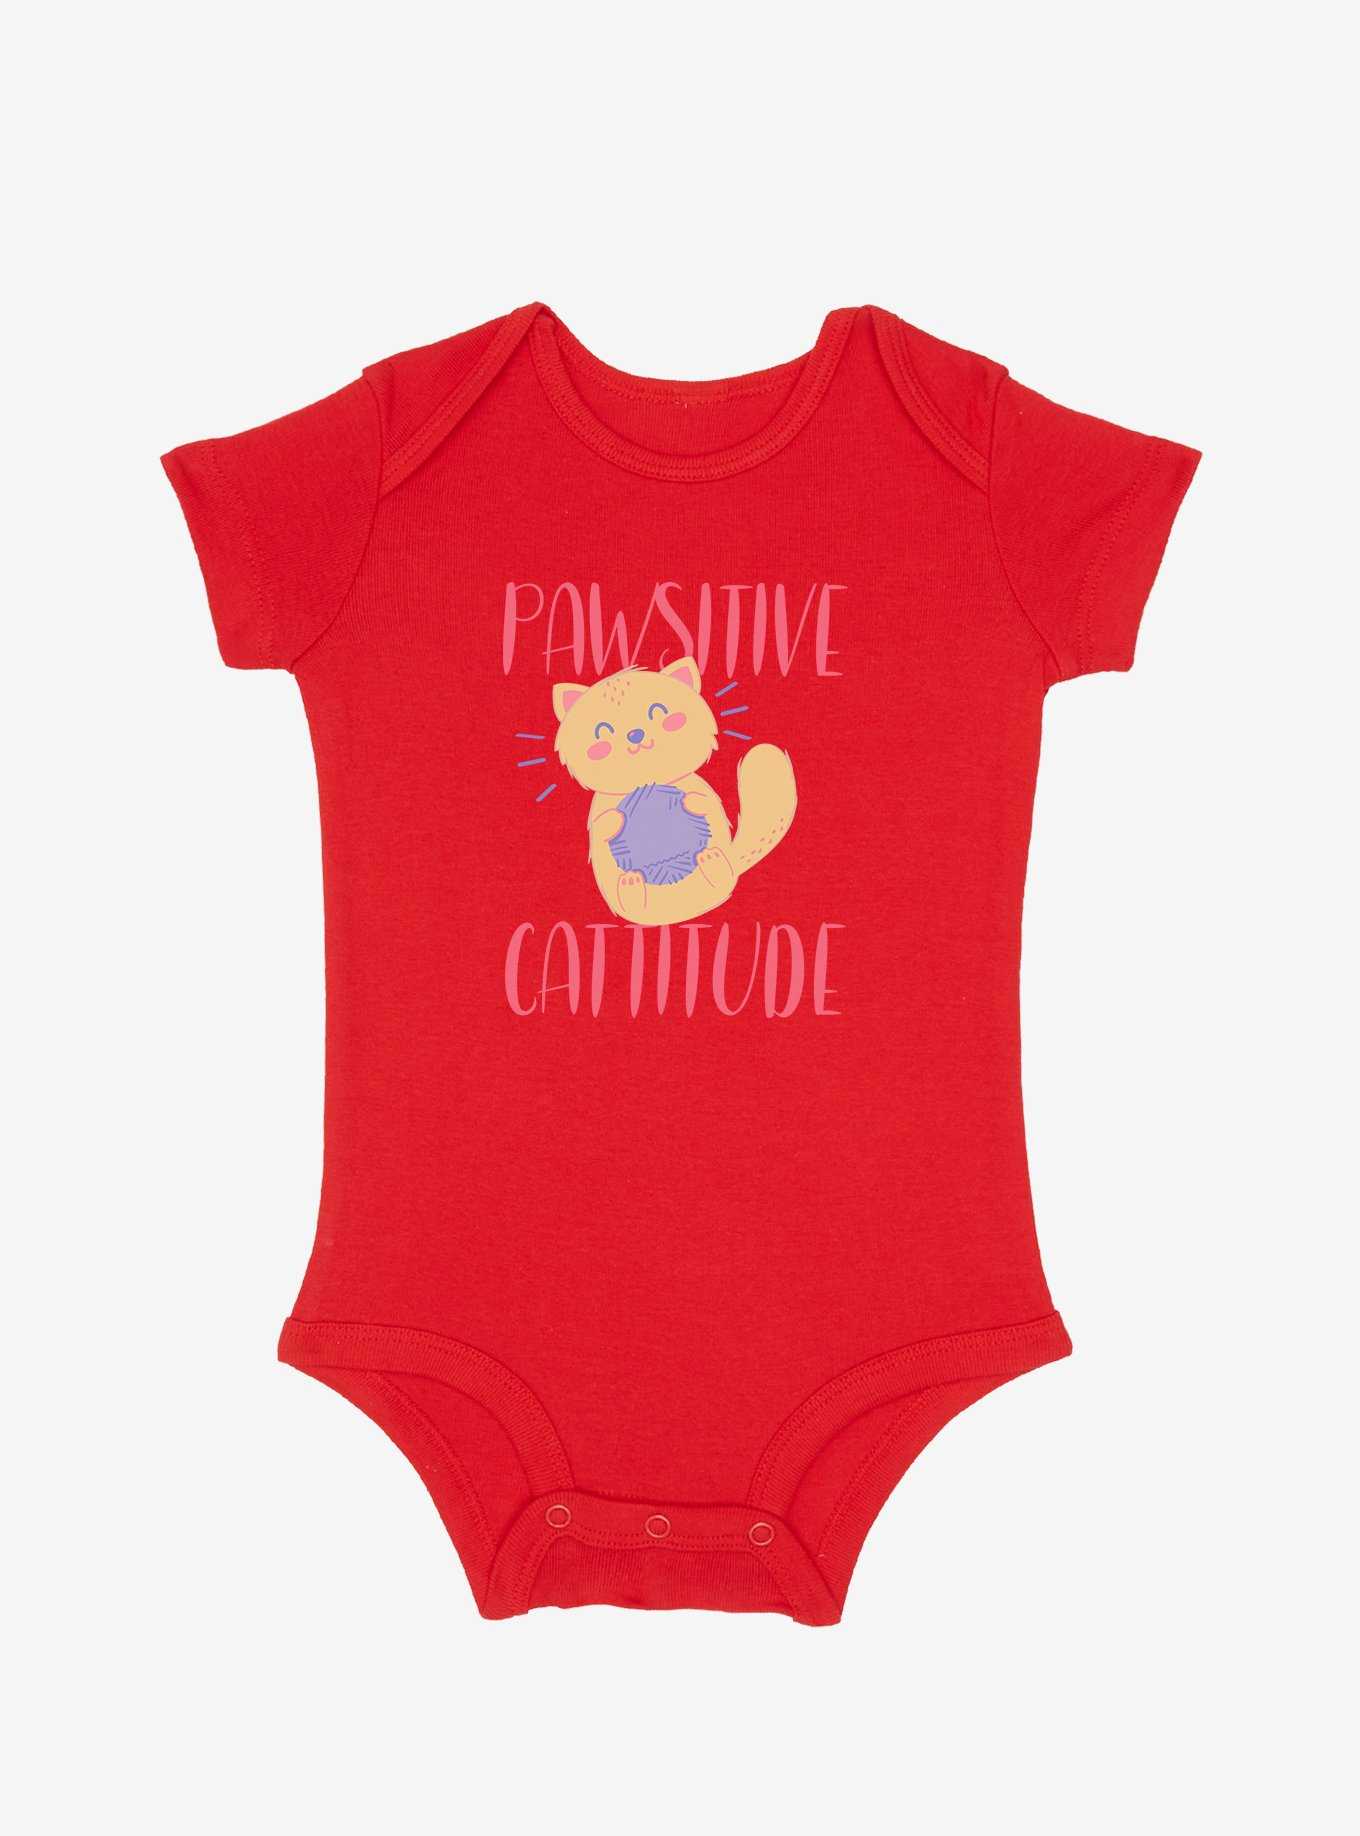 Pawsitive Catitude Infant Bodysuit, , hi-res